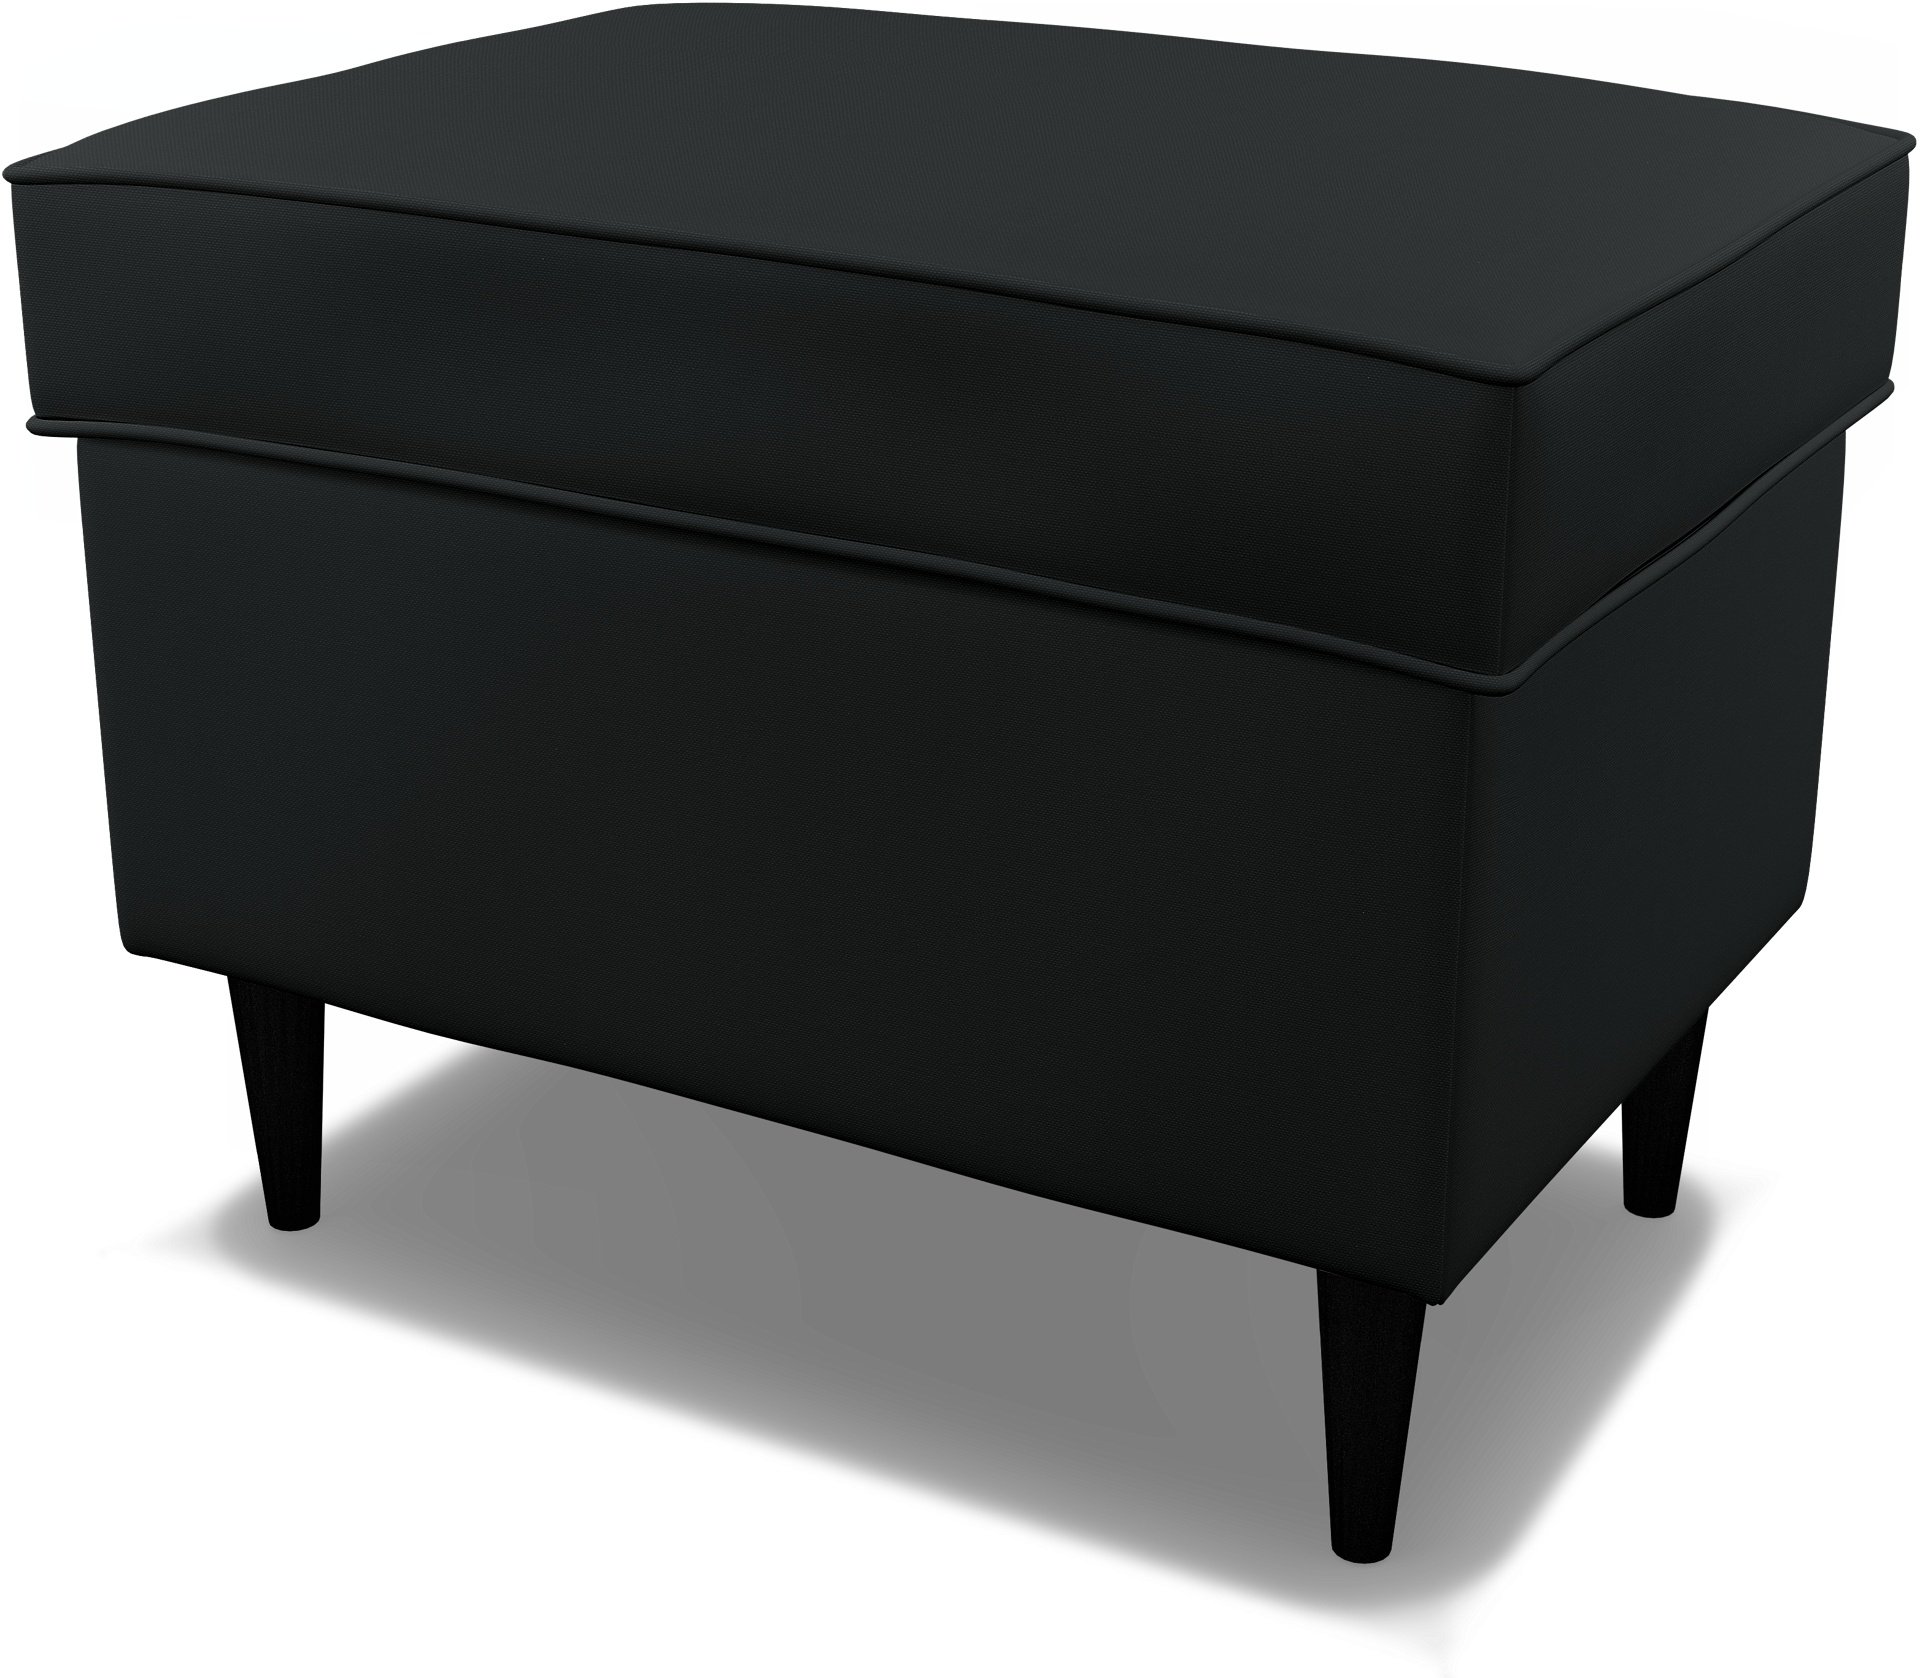 IKEA - Strandmon Footstool cover, Jet Black, Cotton - Bemz